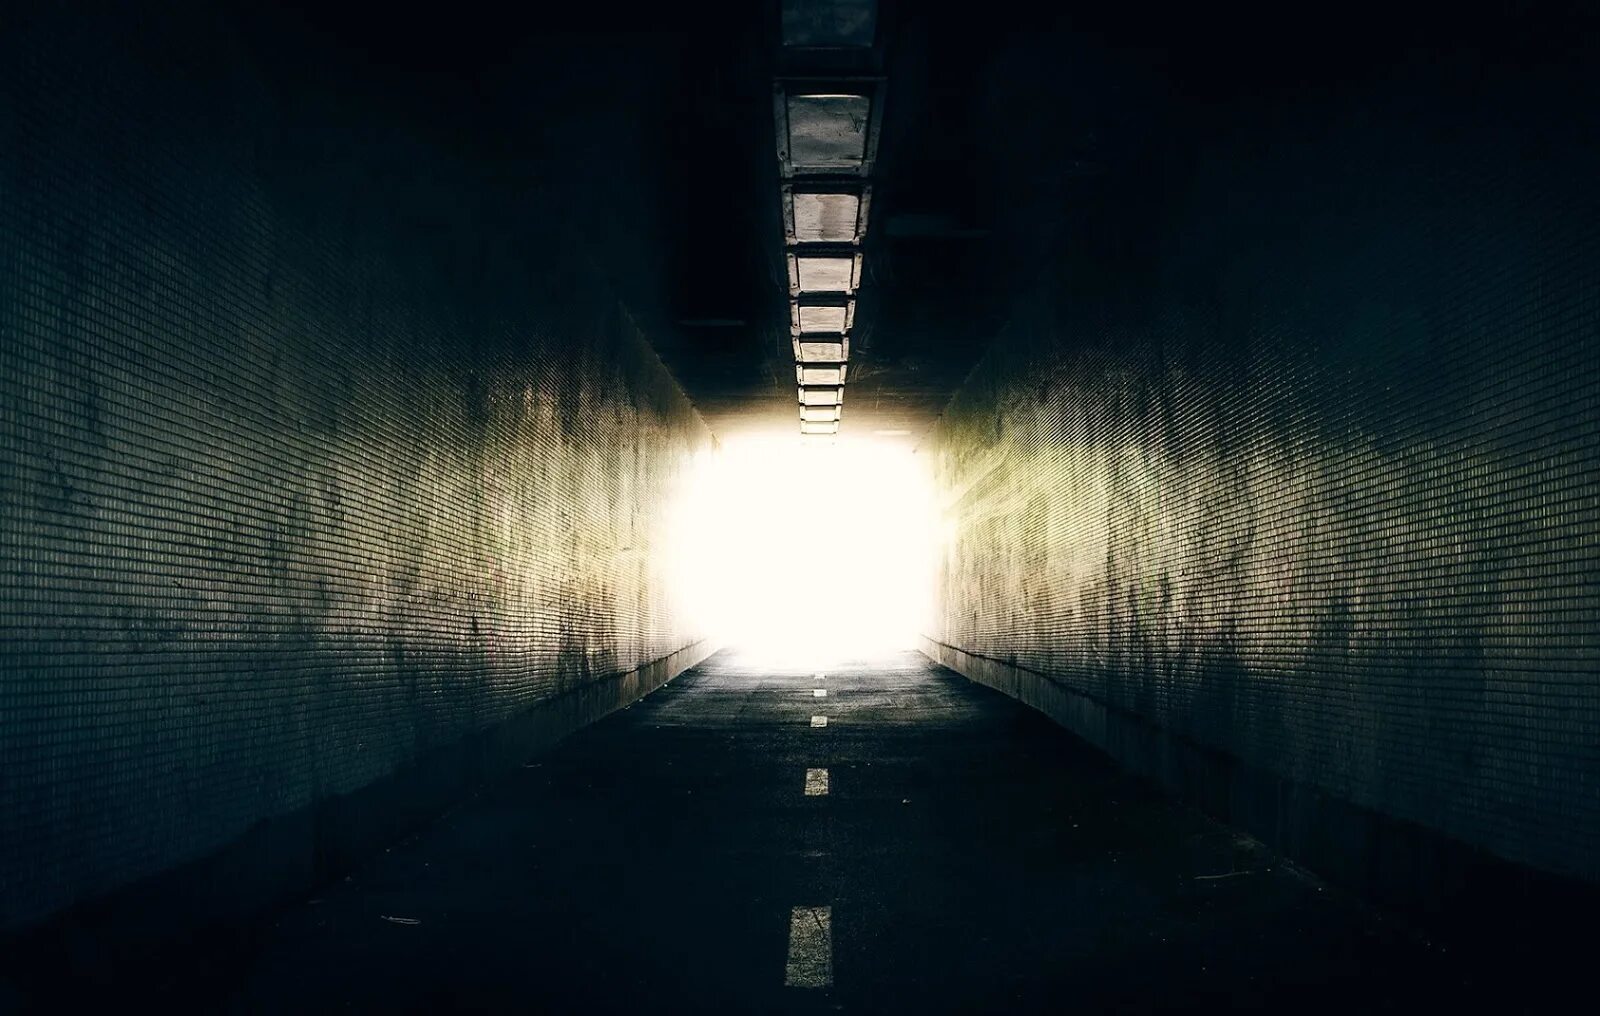 В конце тоннеля свет песня. Свет в конце тоннеля арт. Тоннель света. Абстракция свет в конце туннеля красками. Свет во тьме концепт тоннель.